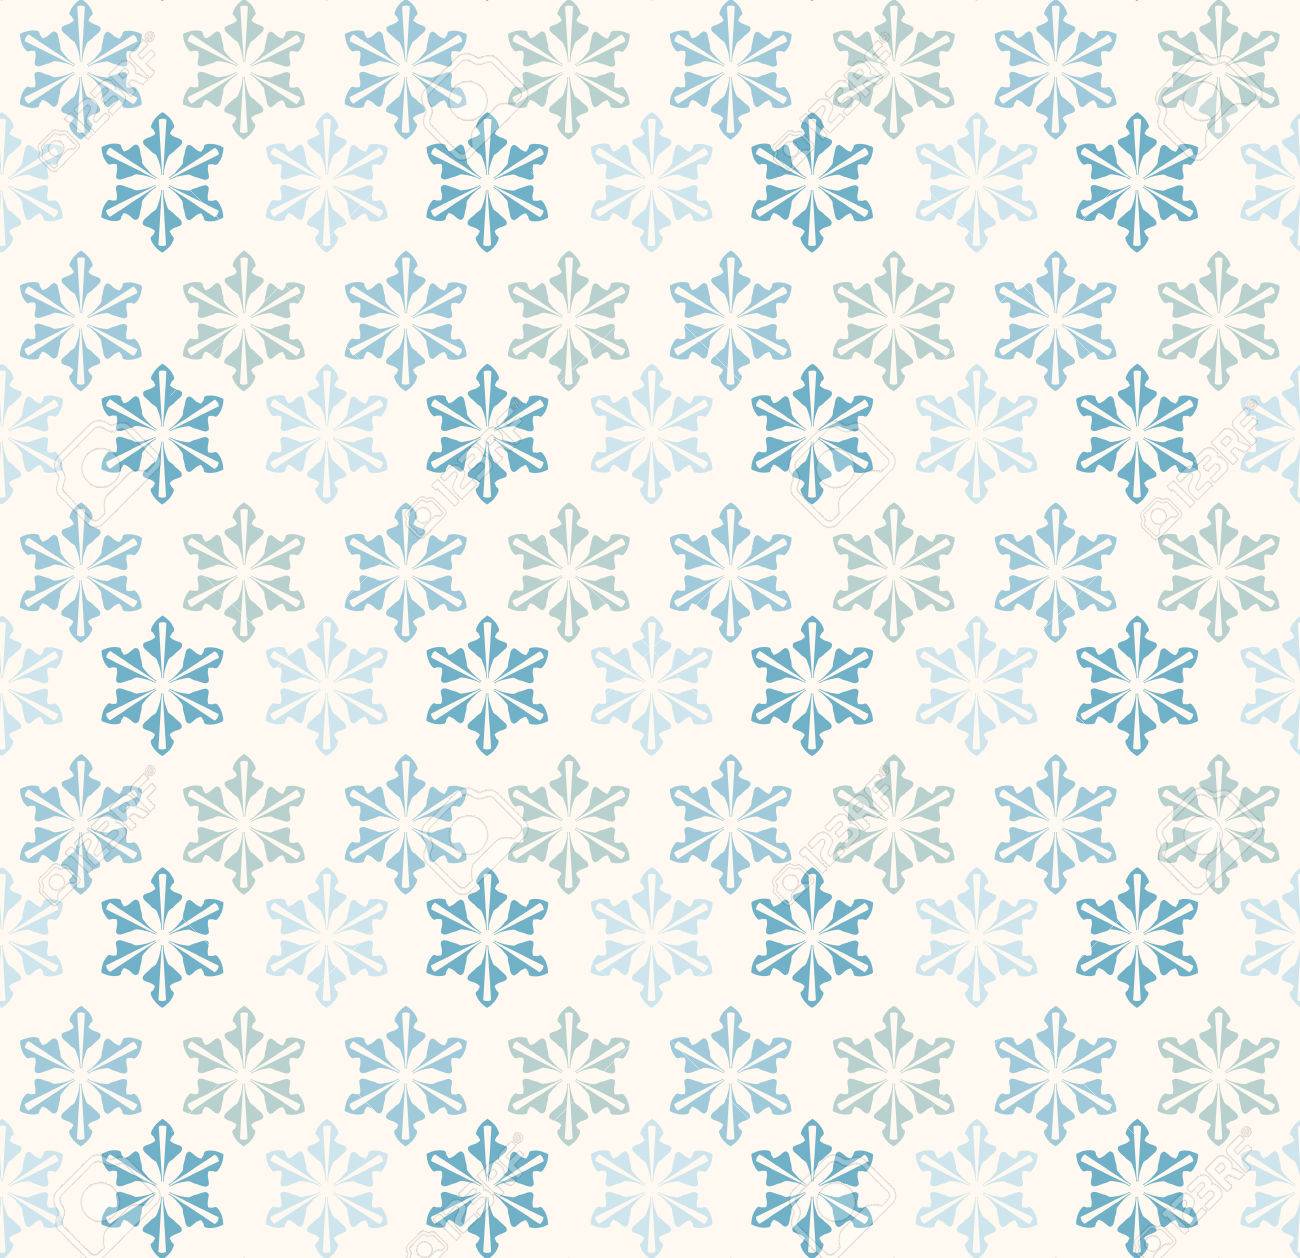 Blue Snow Flakes Patterns Vintage And Retro Design Endless